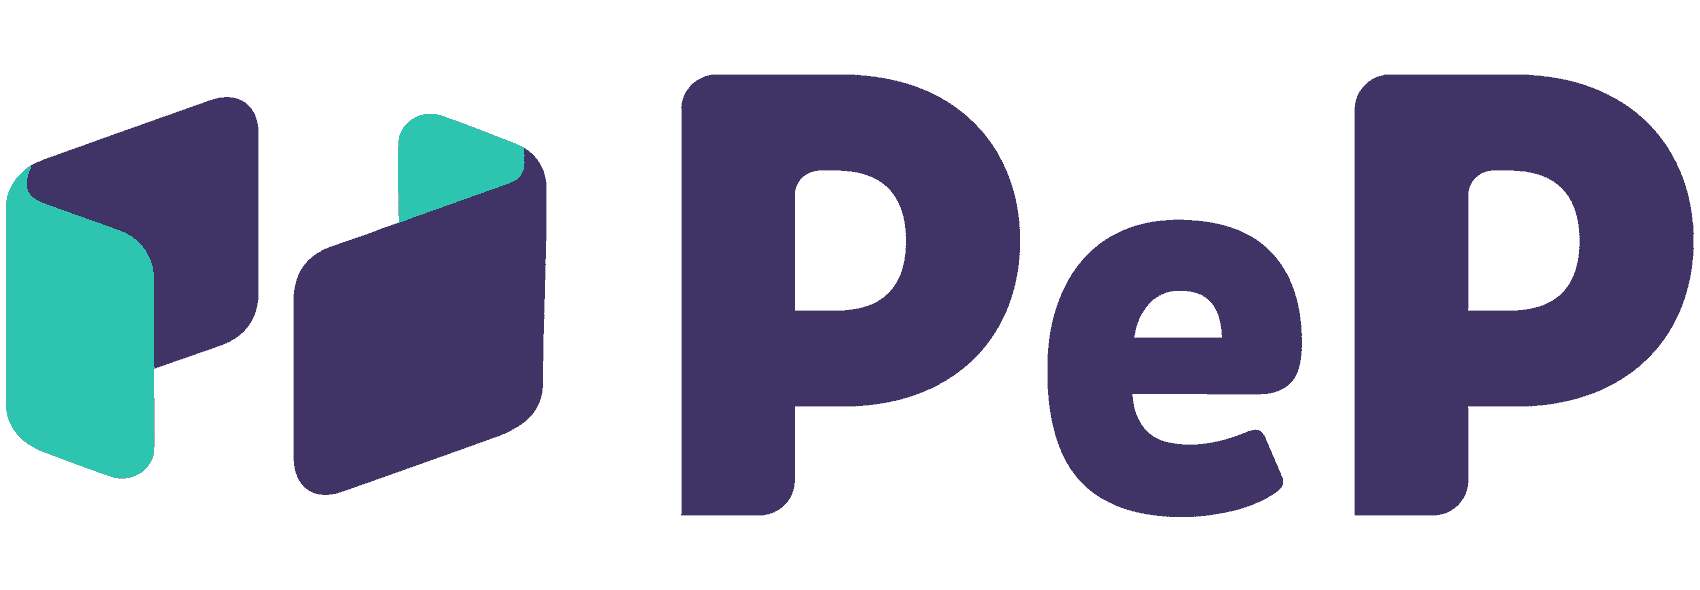 Pep 1 лого. Pep проекты. Lel Pep логотип. Bolelin логотип. Пеп 8